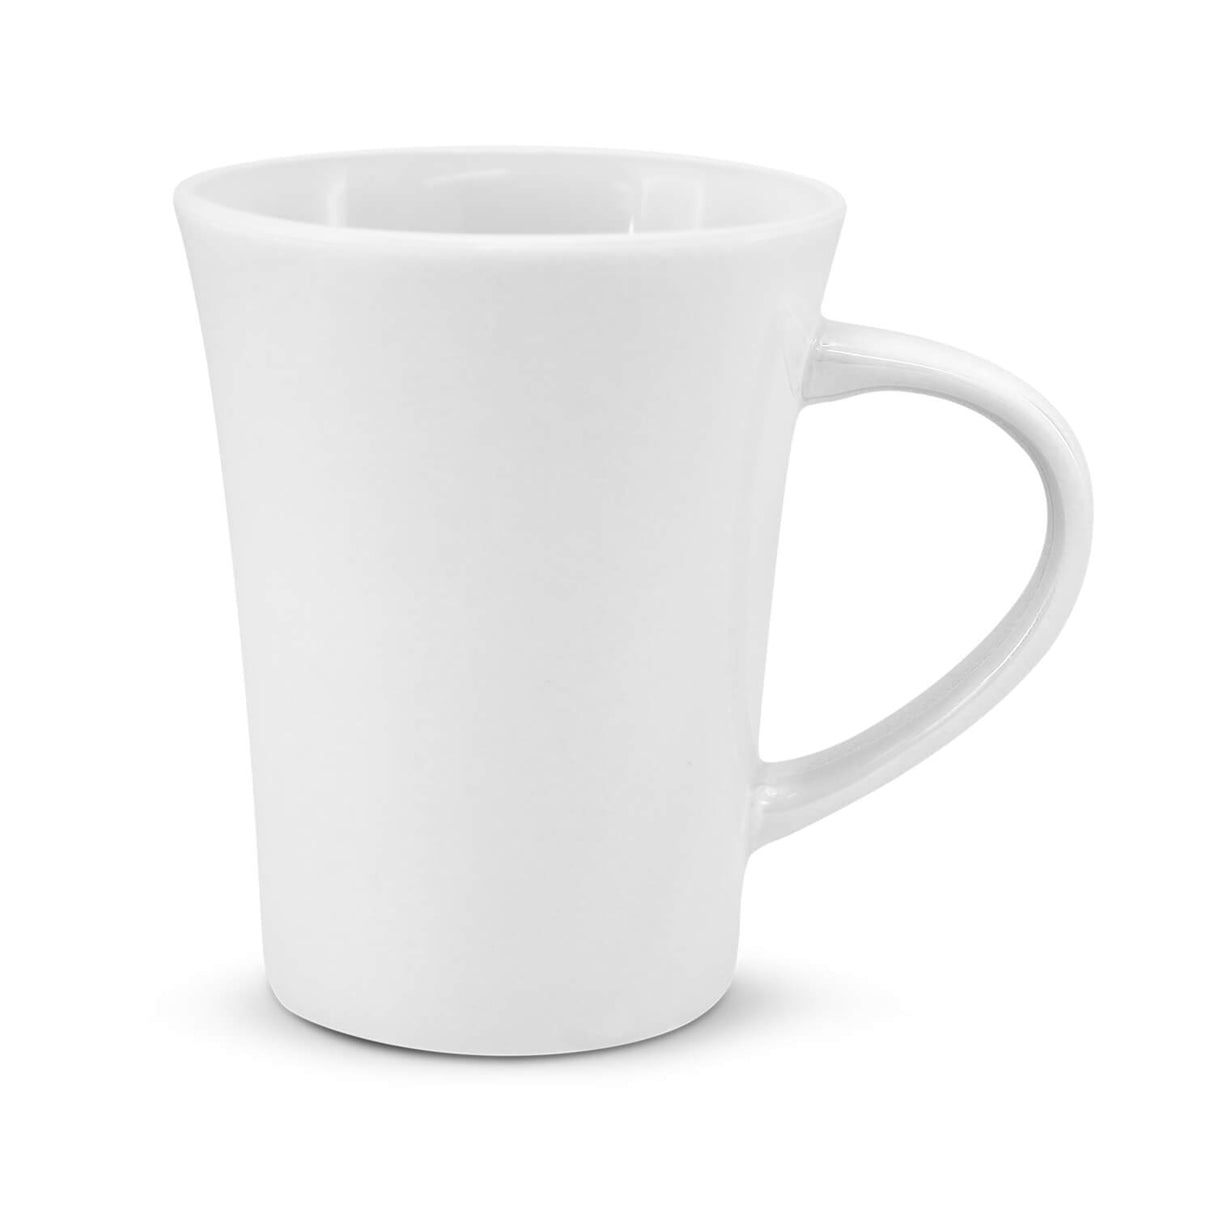 Contoured Coffee Mug 300ml - Printed